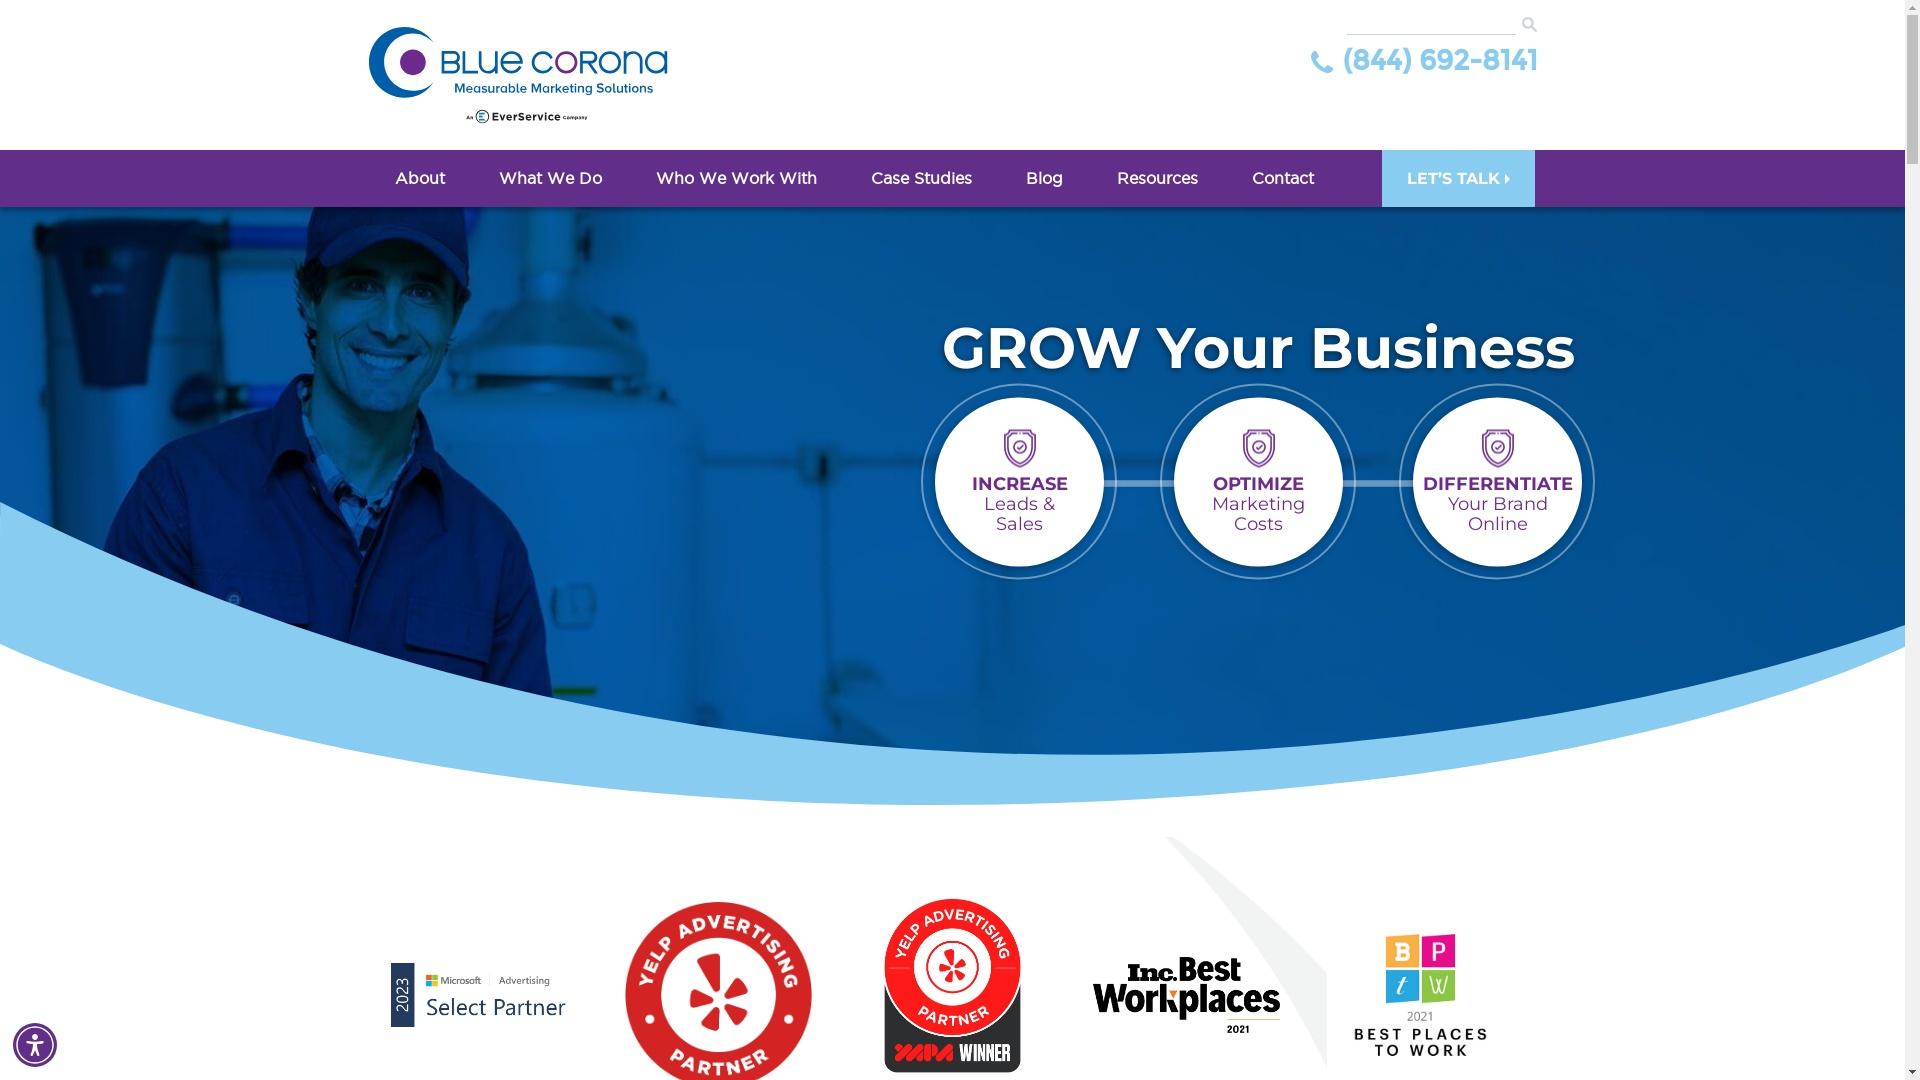 bluecorona.com profile